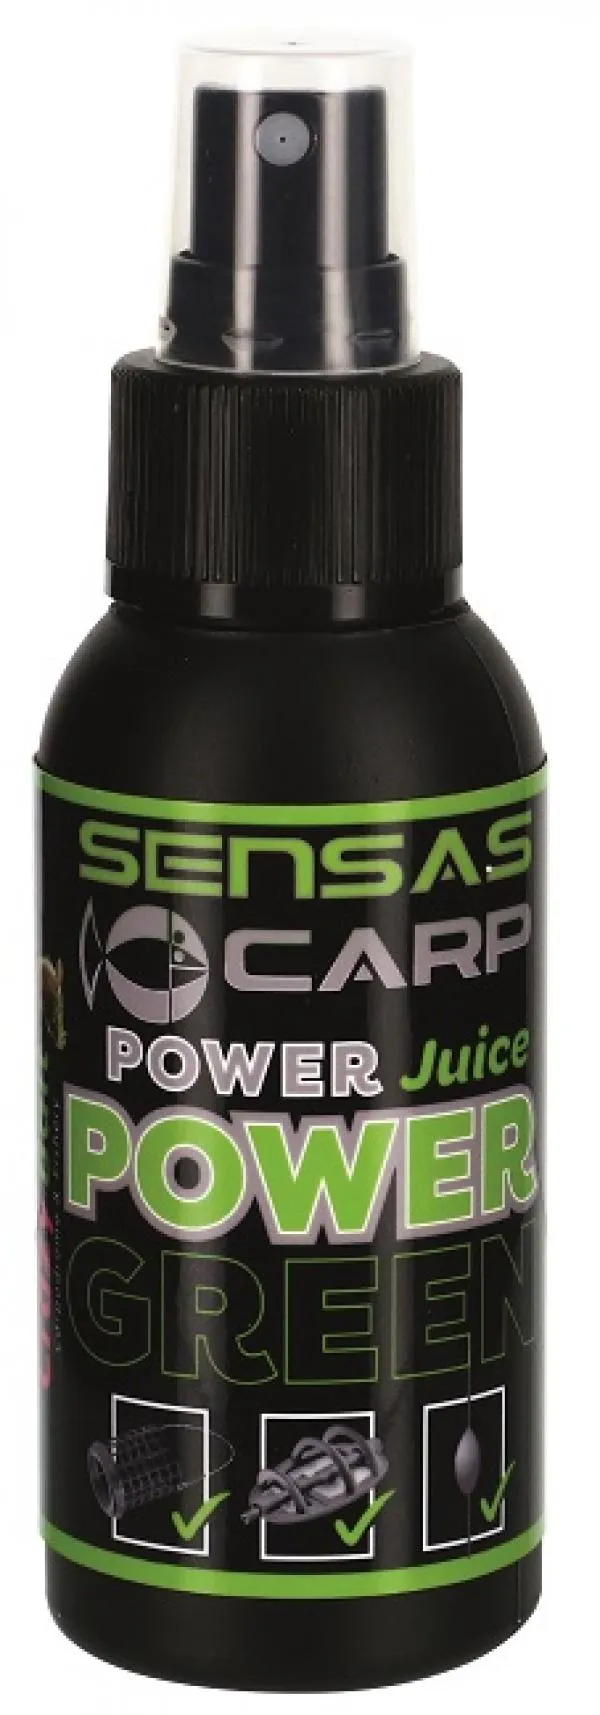 Sensas Juice Power Green (fokhagyma) 75ml